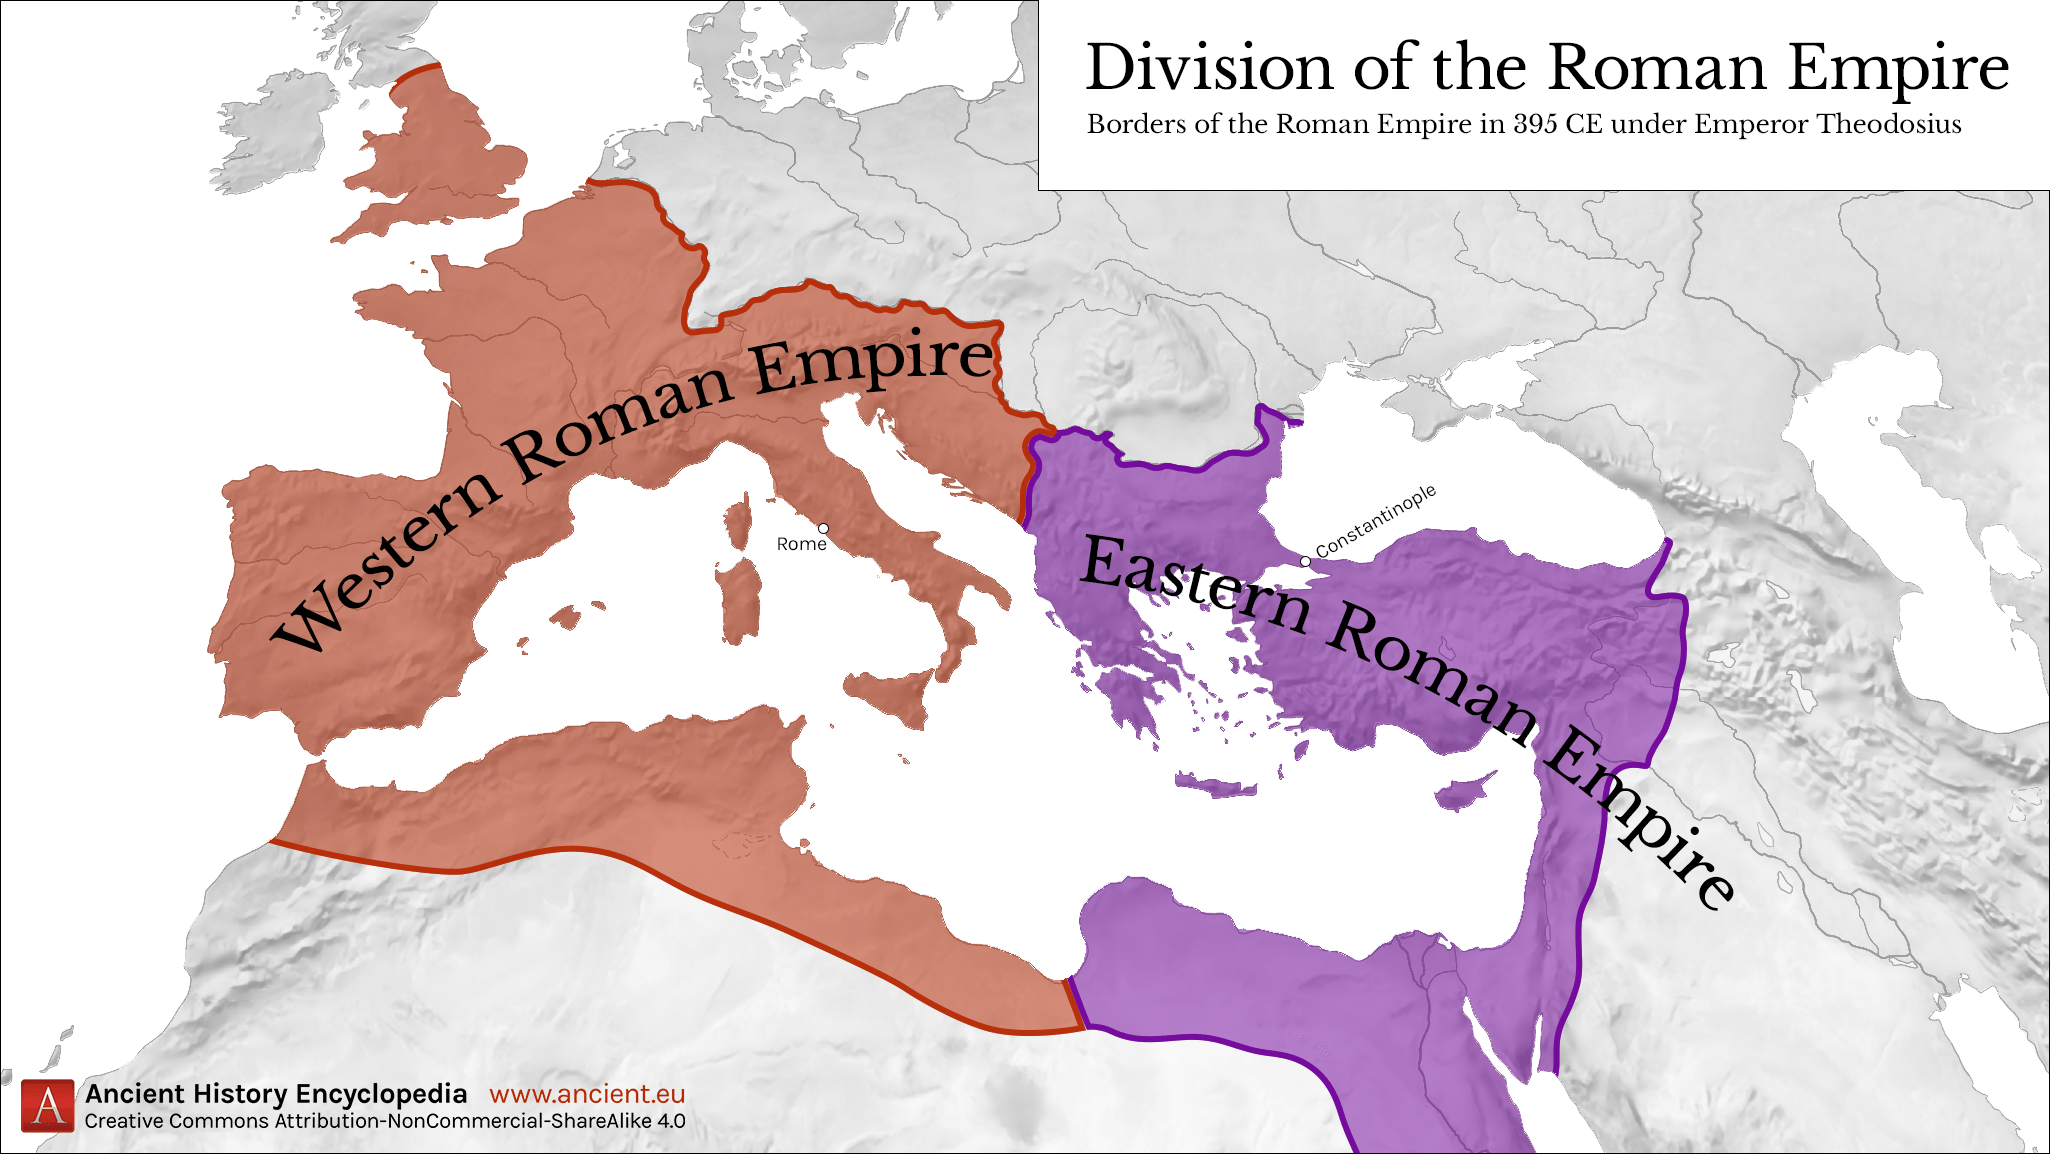 Western Eastern Roman Empire 395 Ce Illustration World History Encyclopedia